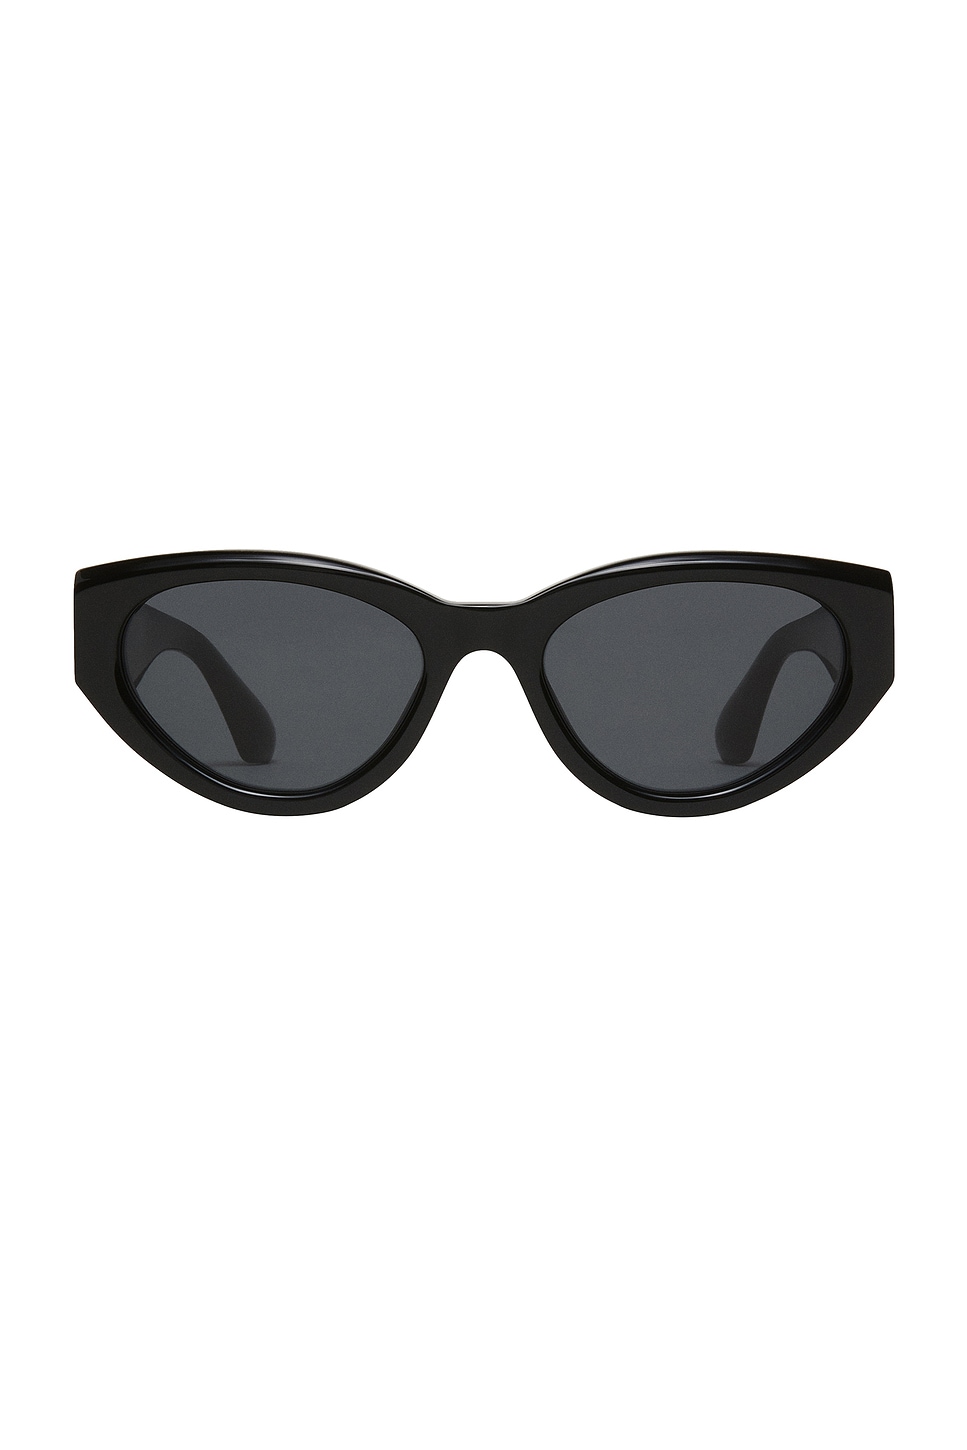 06 Sunglasses in Black